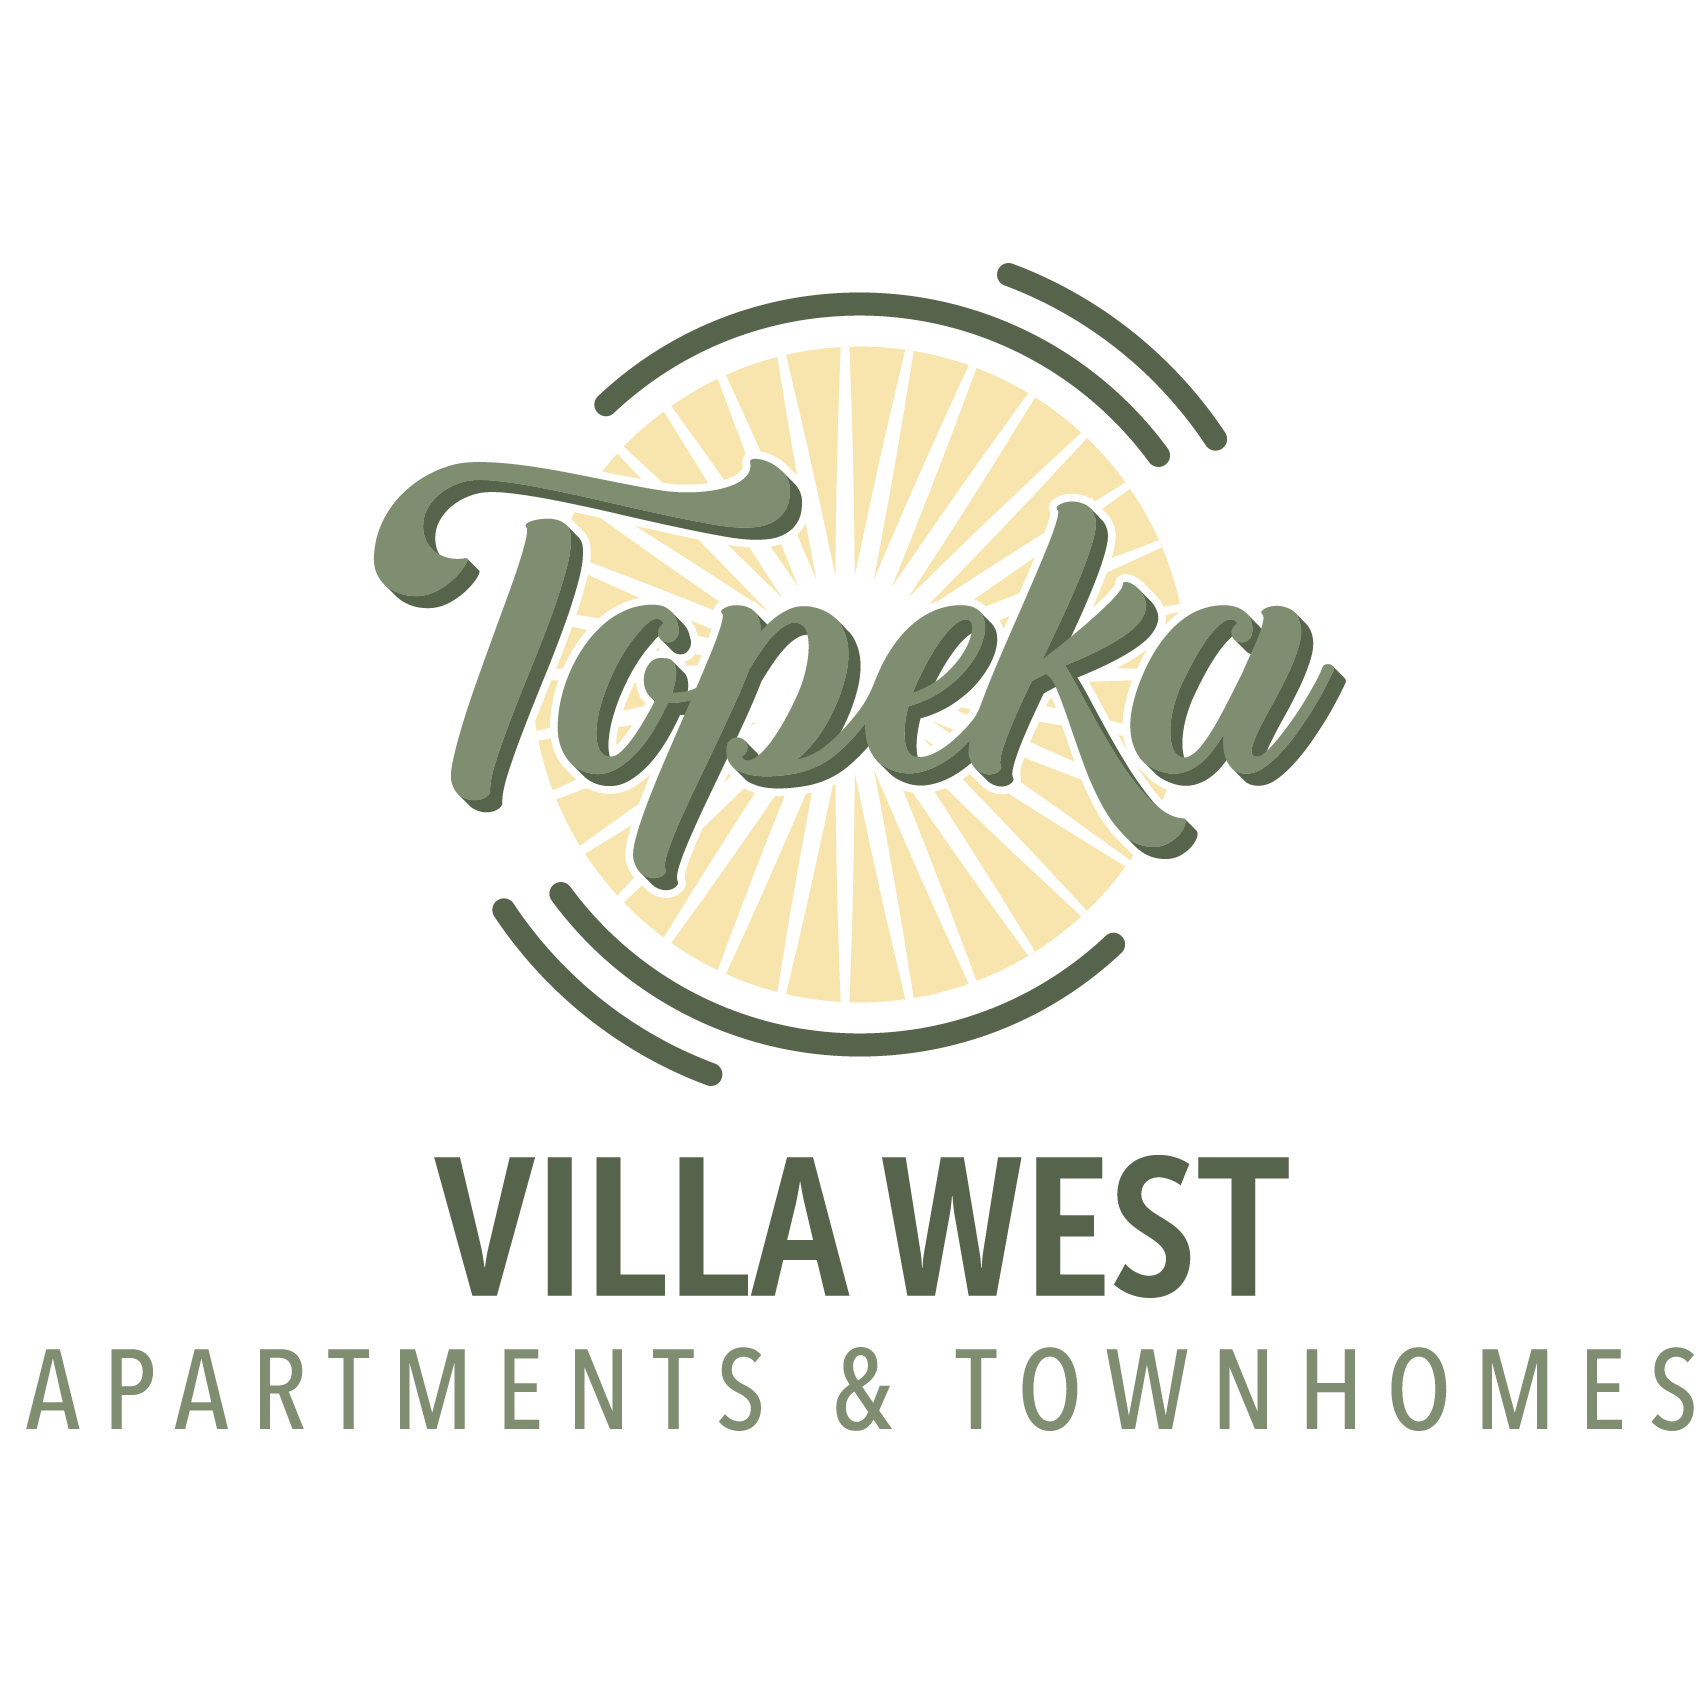 Villa West Apartments and Townhomes - Topeka, KS 66614 - (785)329-4358 | ShowMeLocal.com